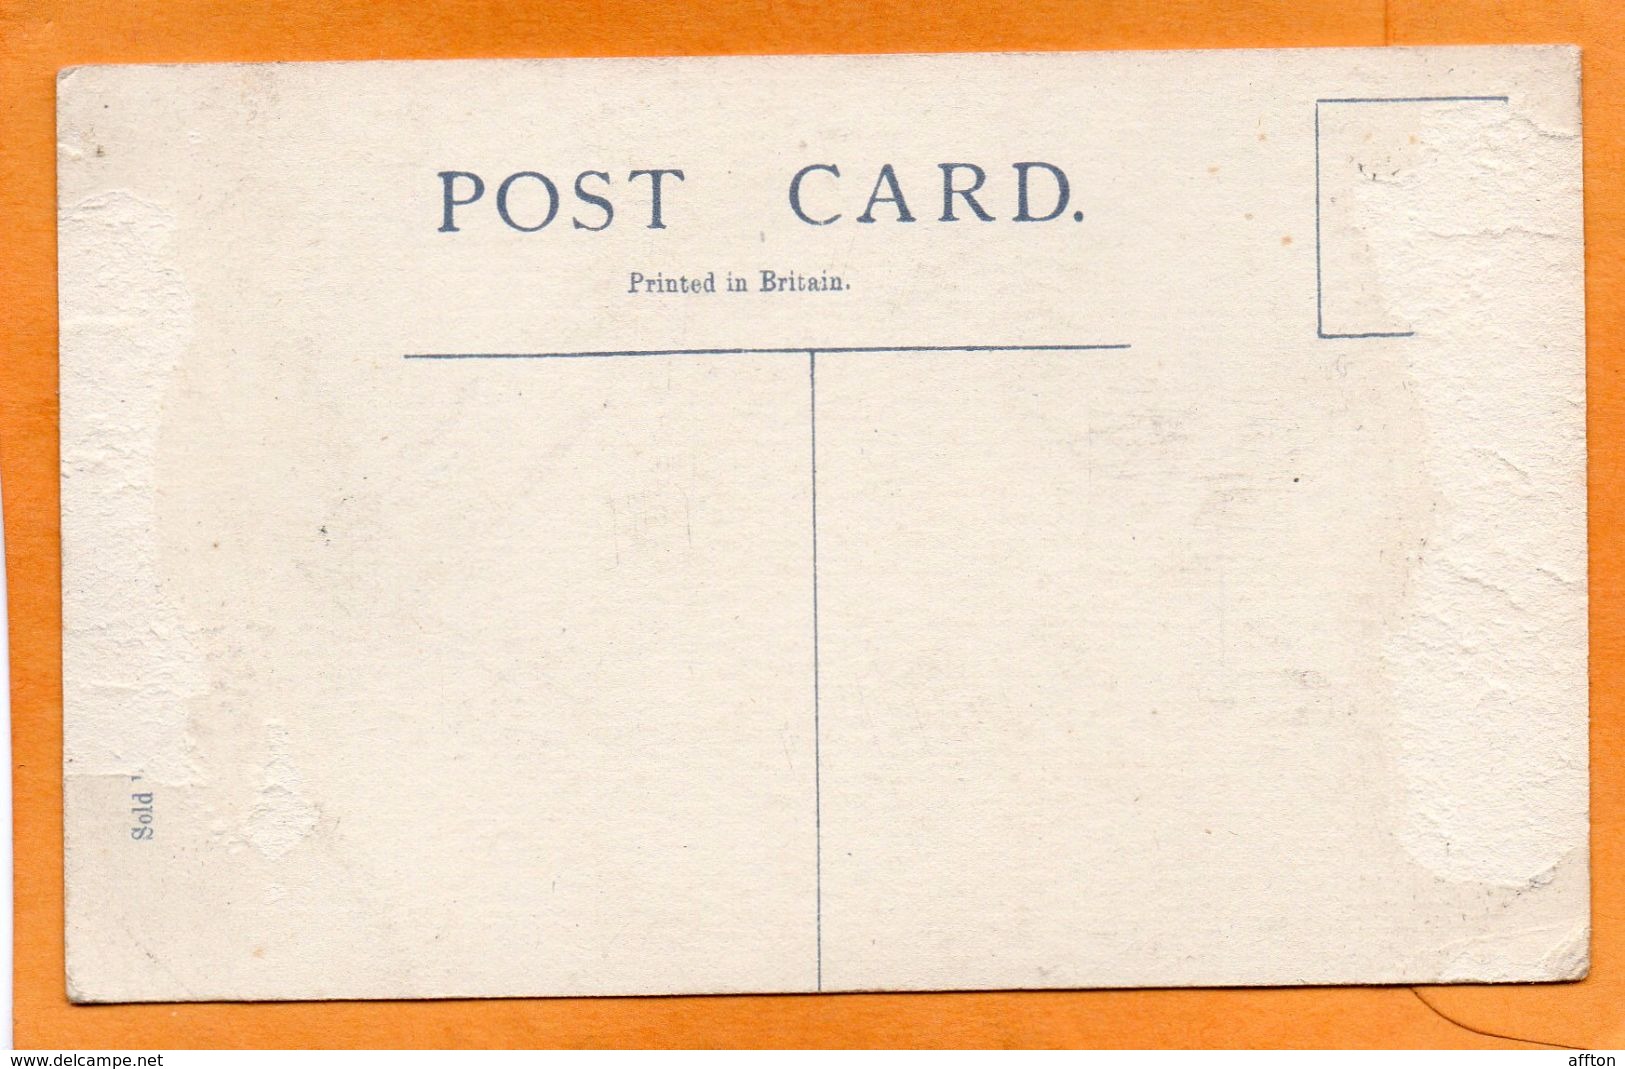 Saint Lucia BWI 1910 Postcard - Saint Lucia